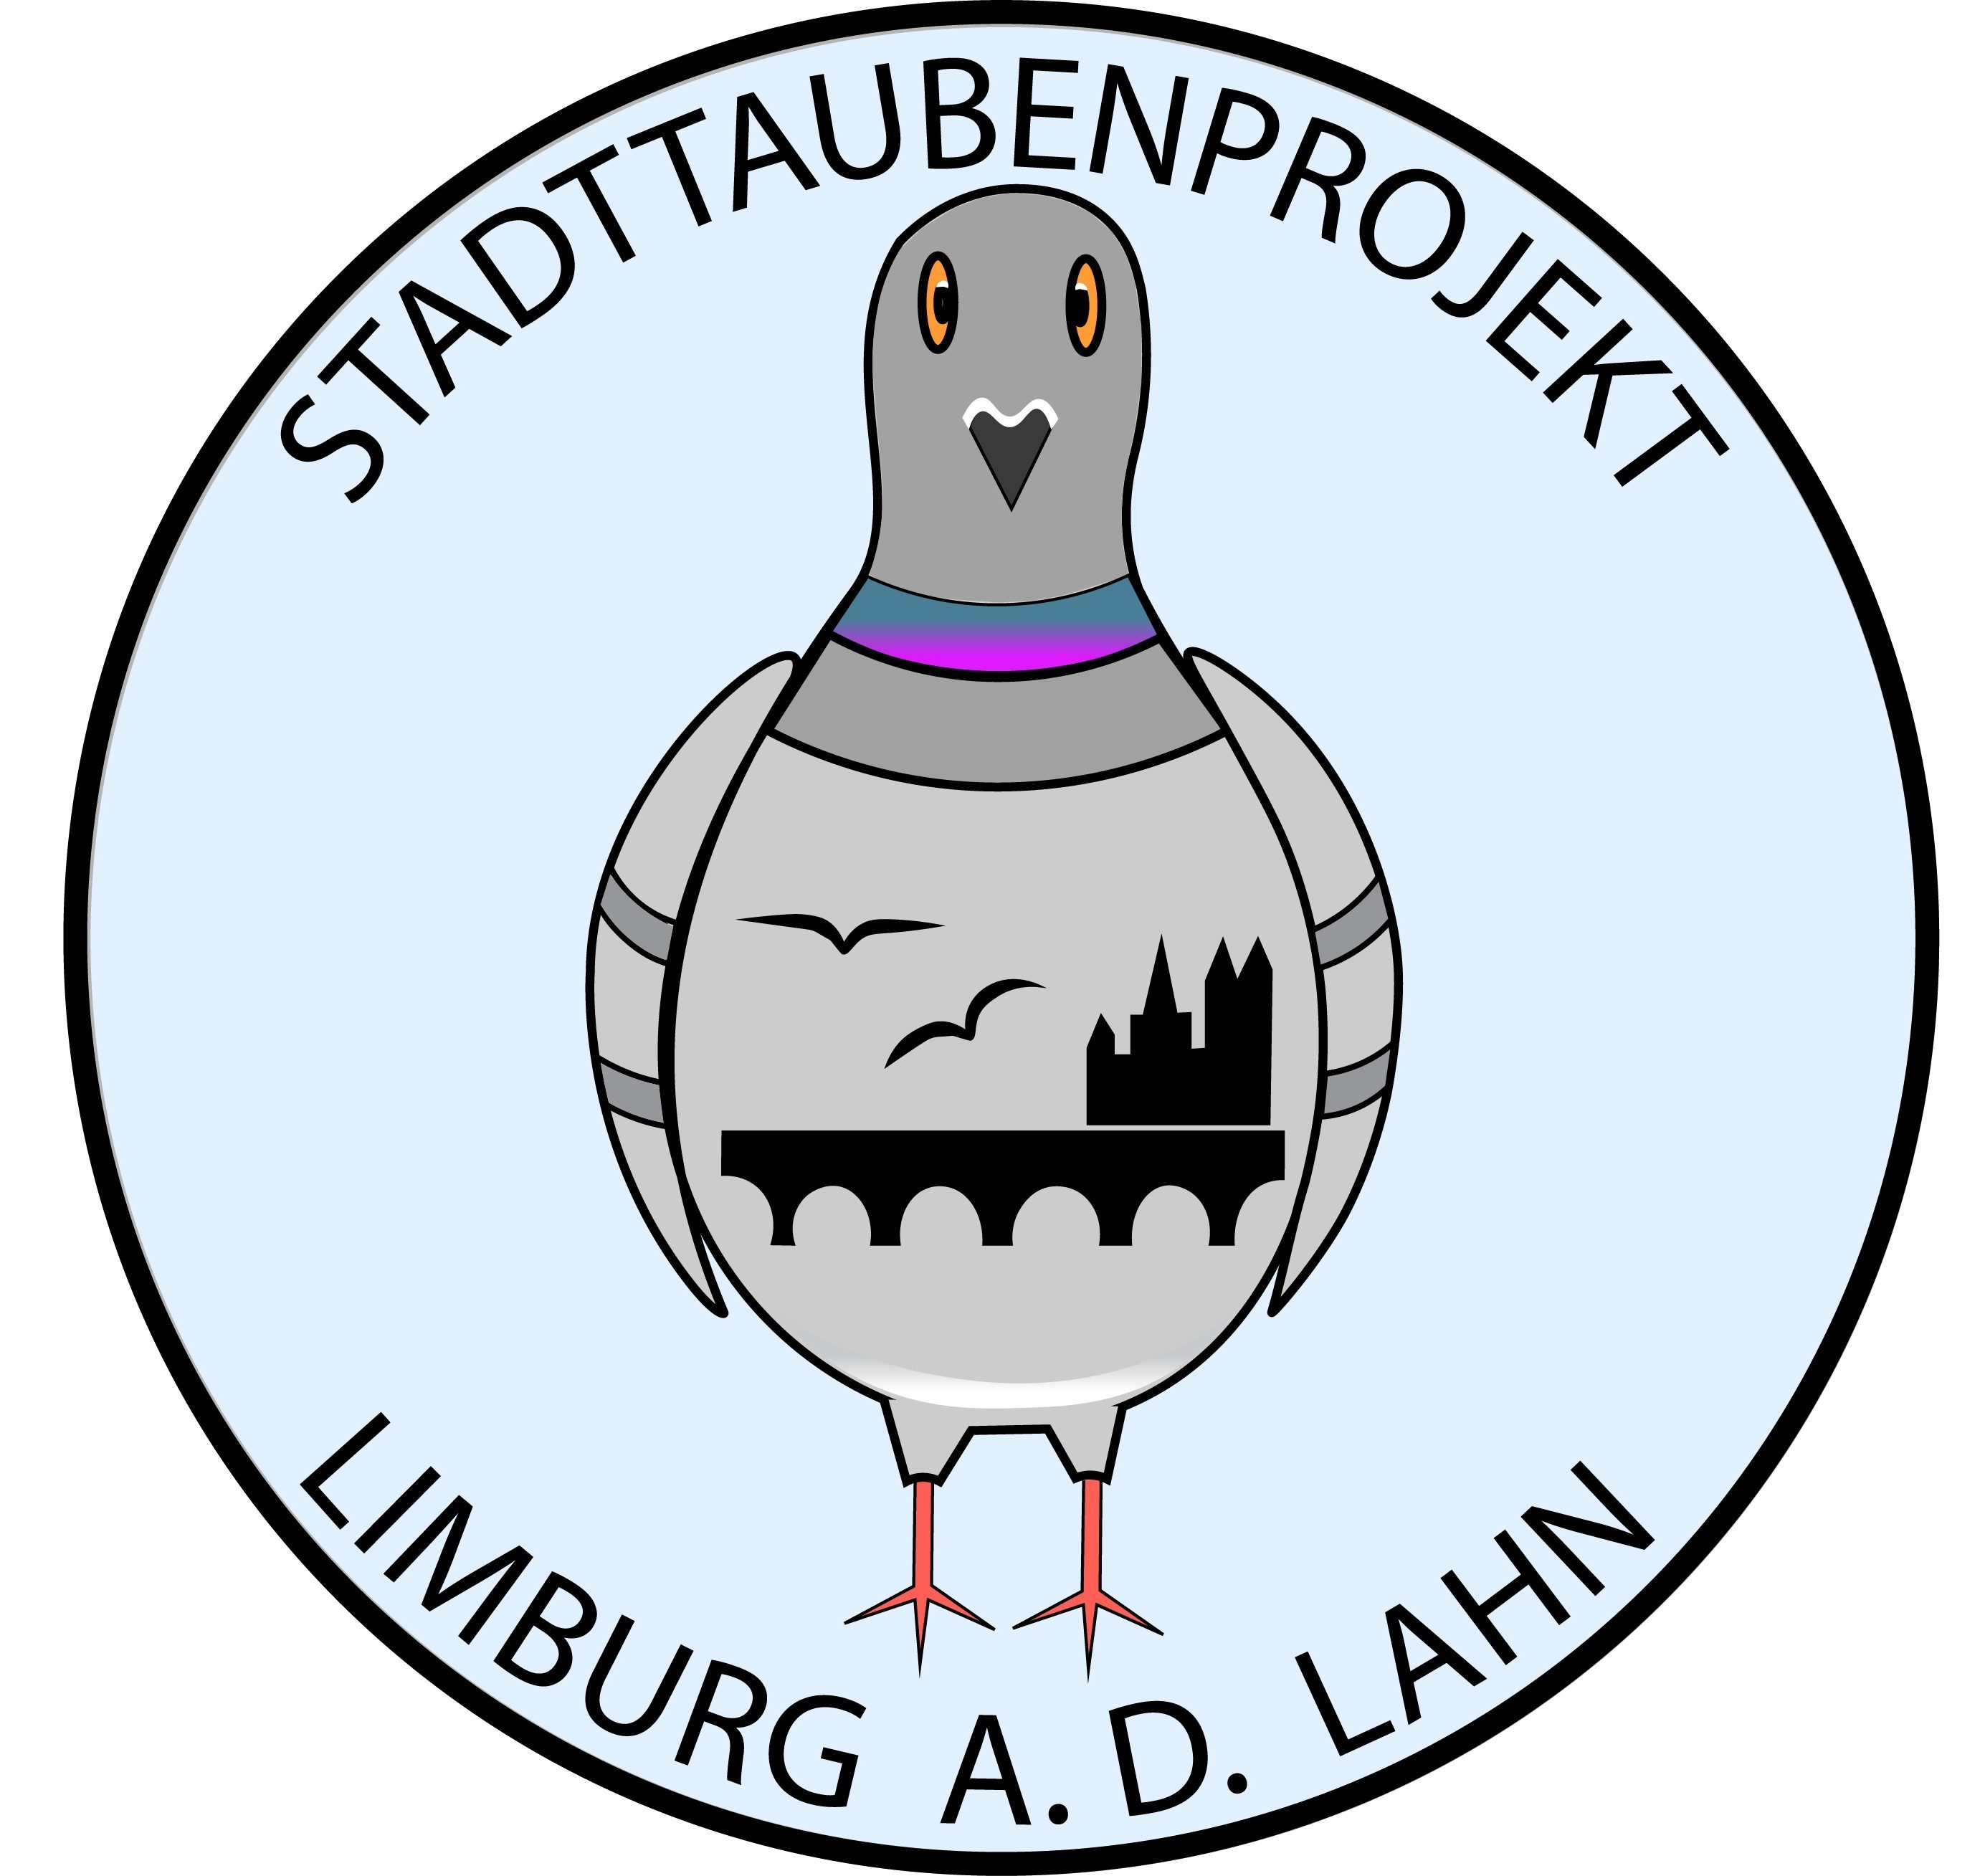 Stadttaubenprojekt Limburg a. d. Lahn